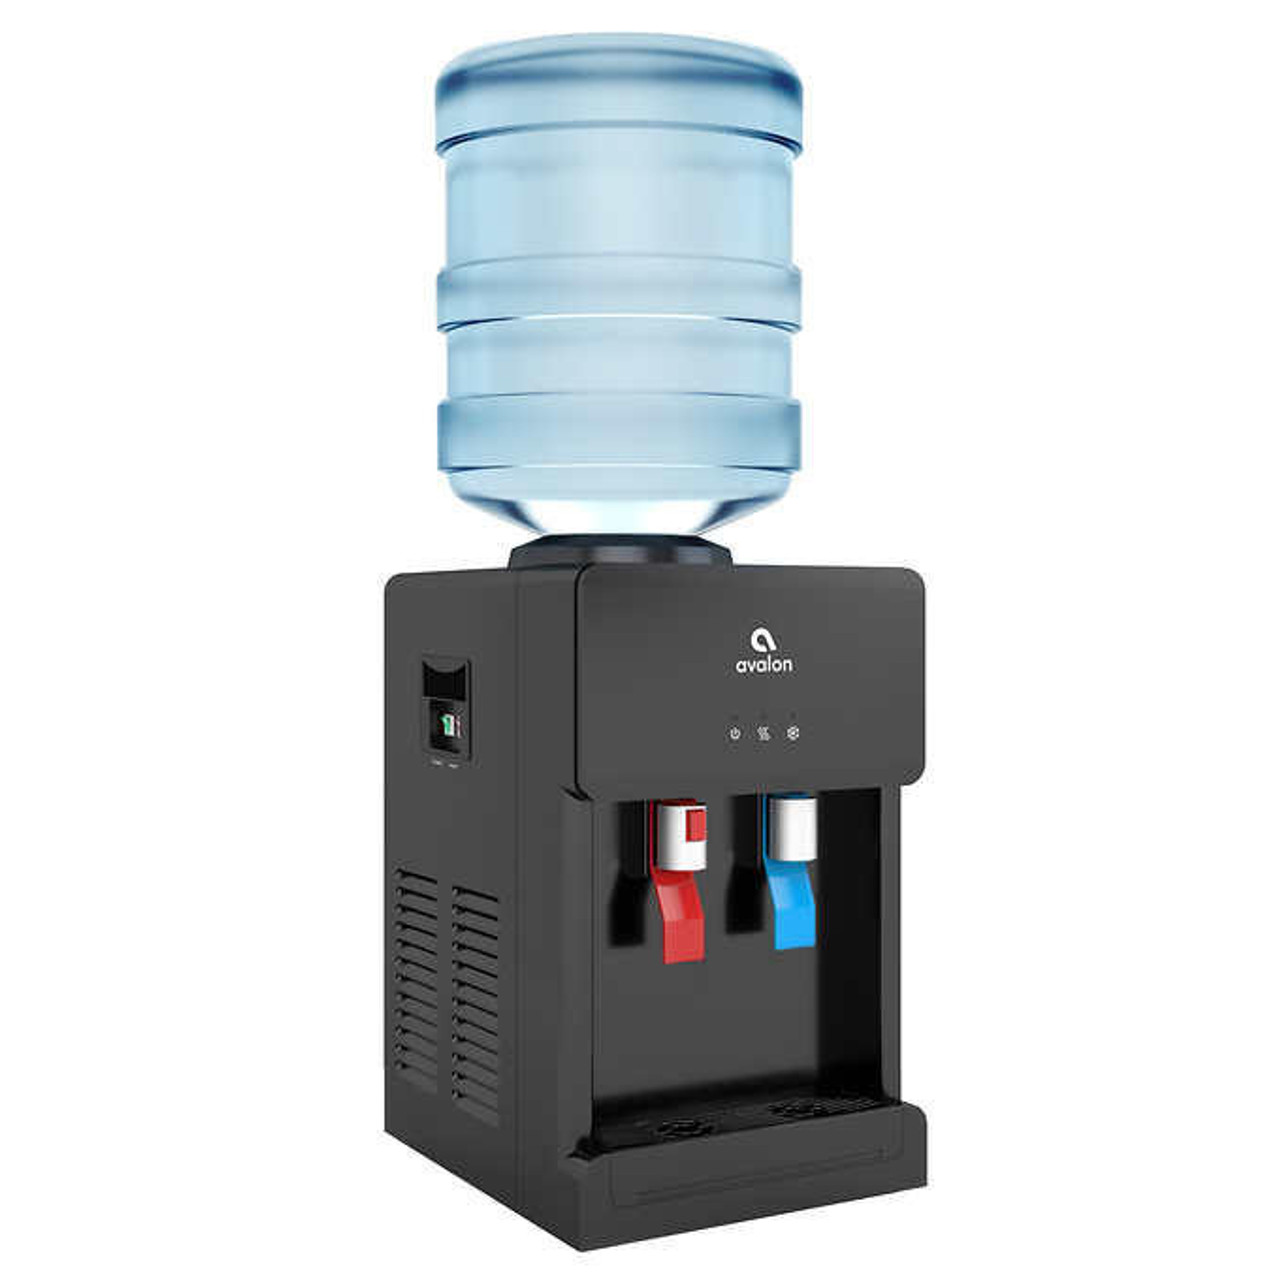  Avalon Premium Innovative Design Top-Loading Countertop Water Cooler 